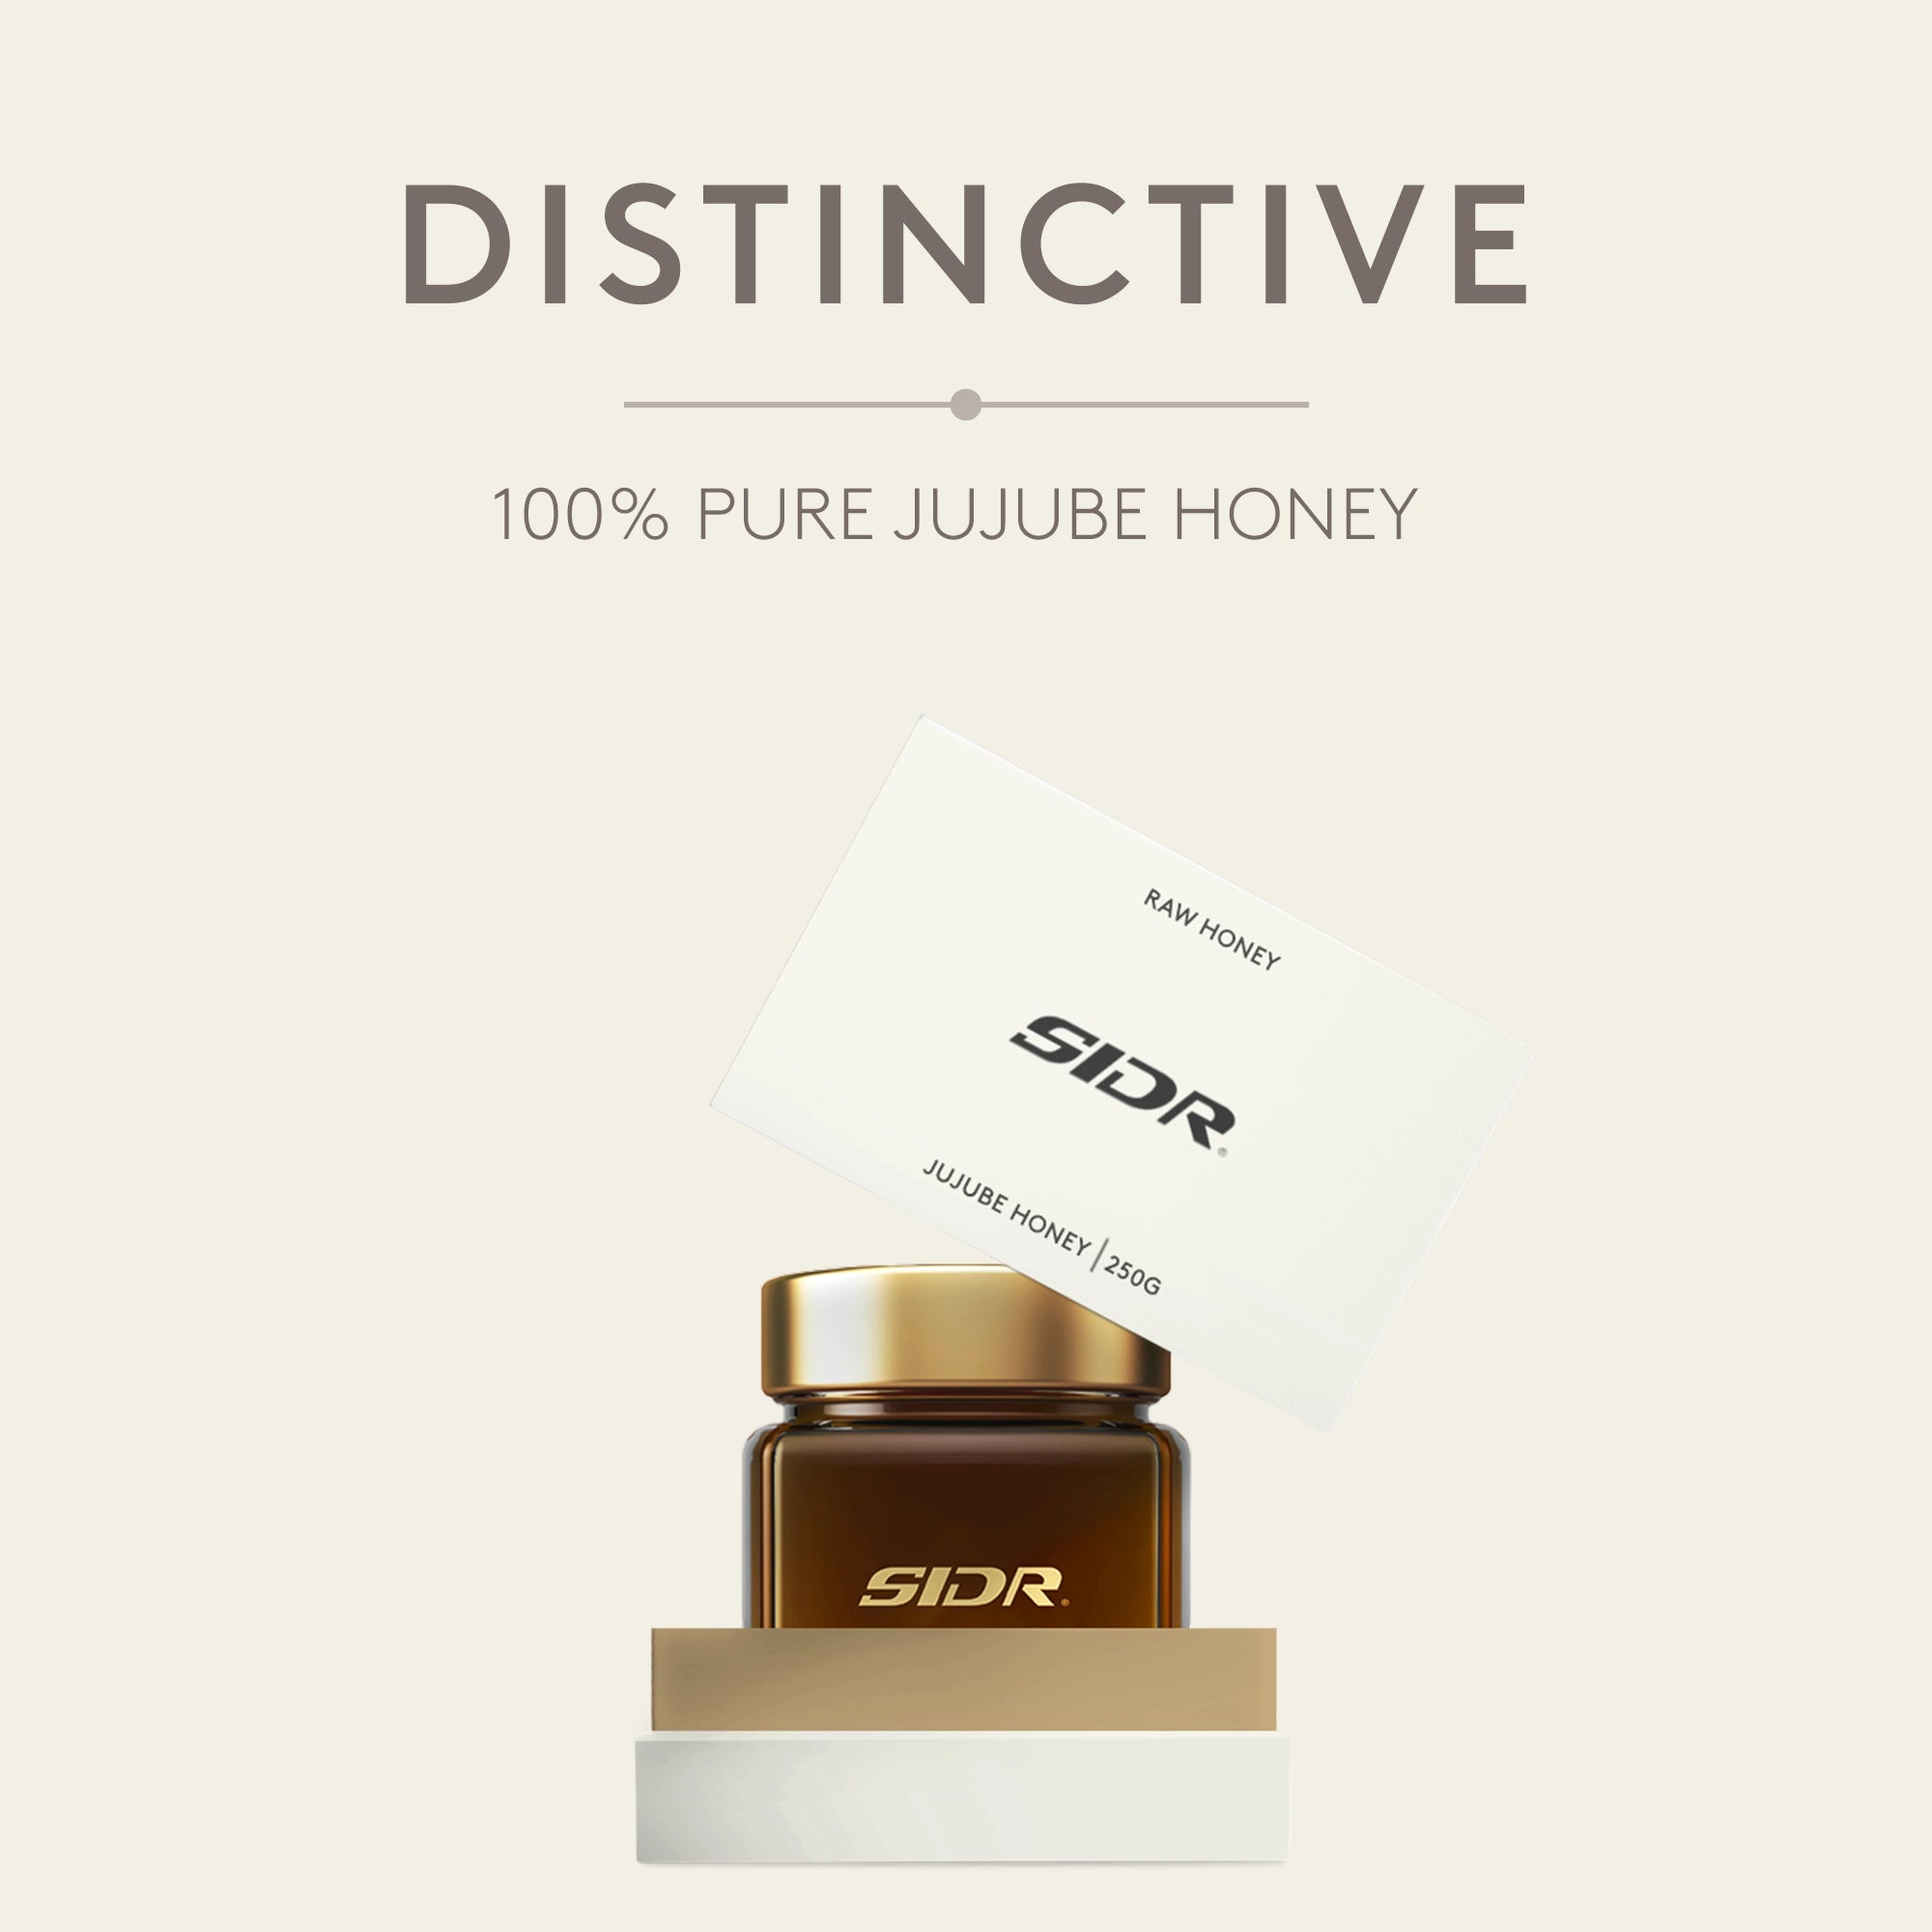 sidr jujube honey distinctive